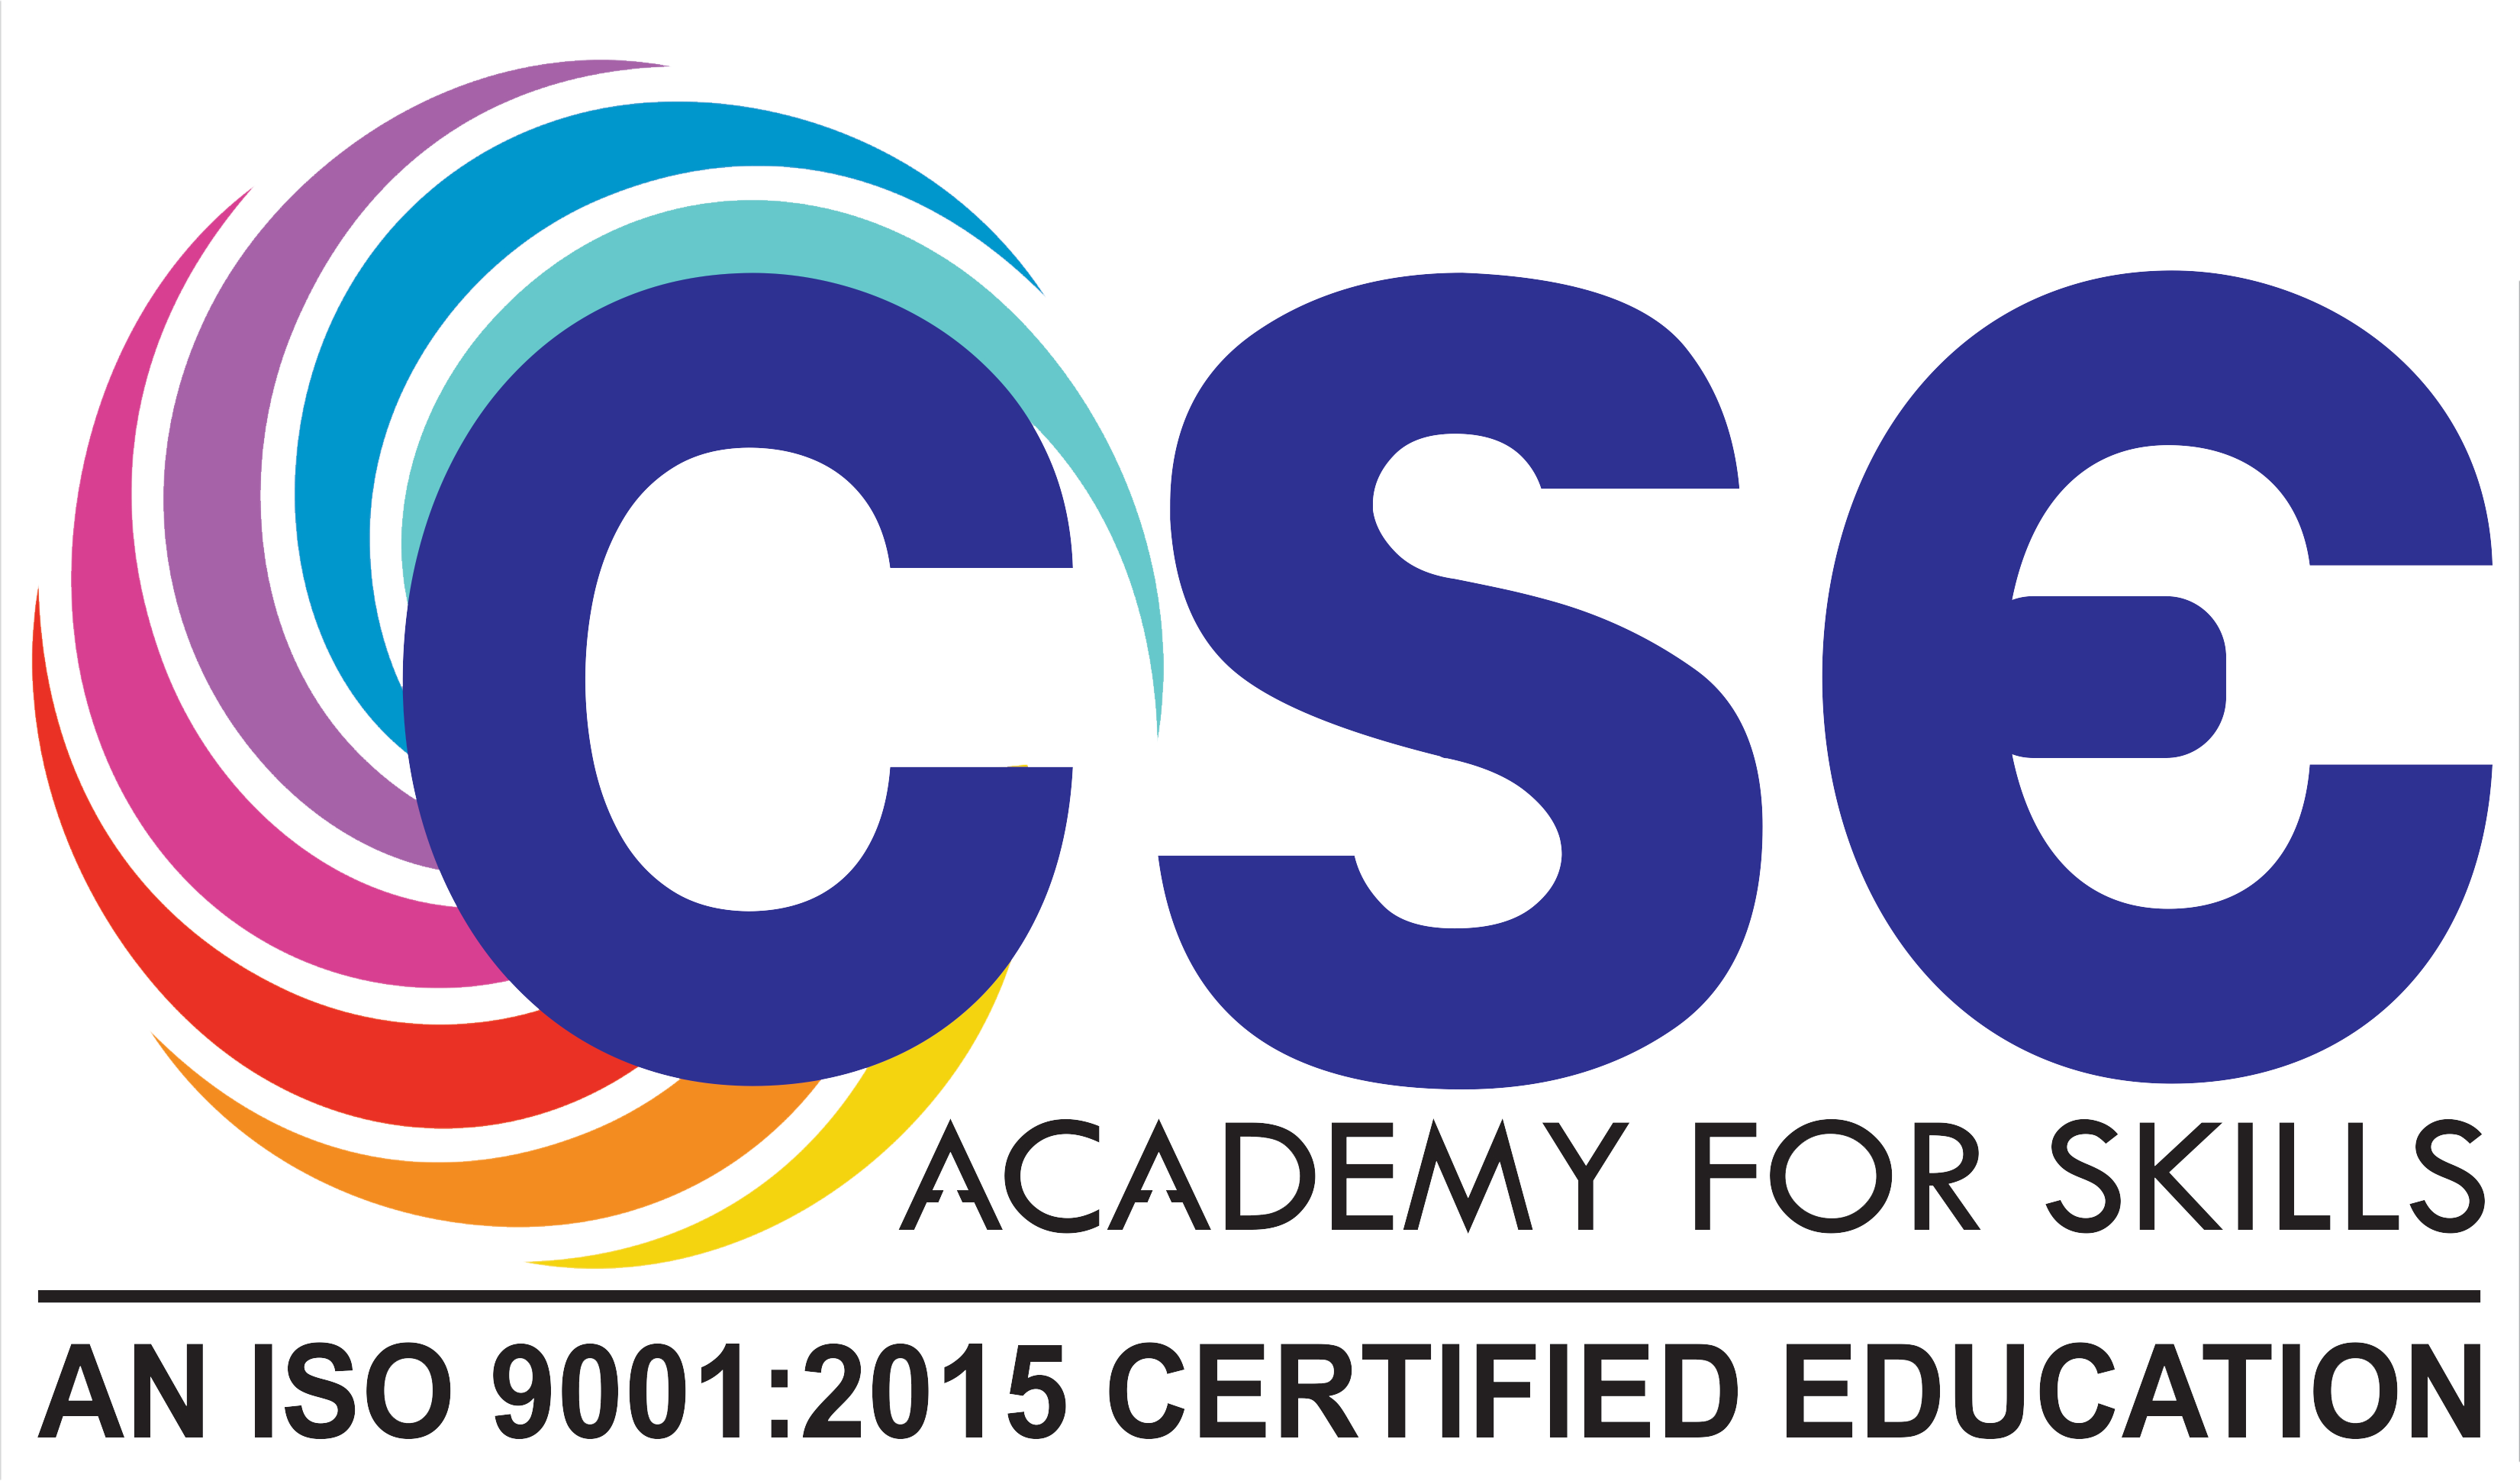 CSE Academy for Skills